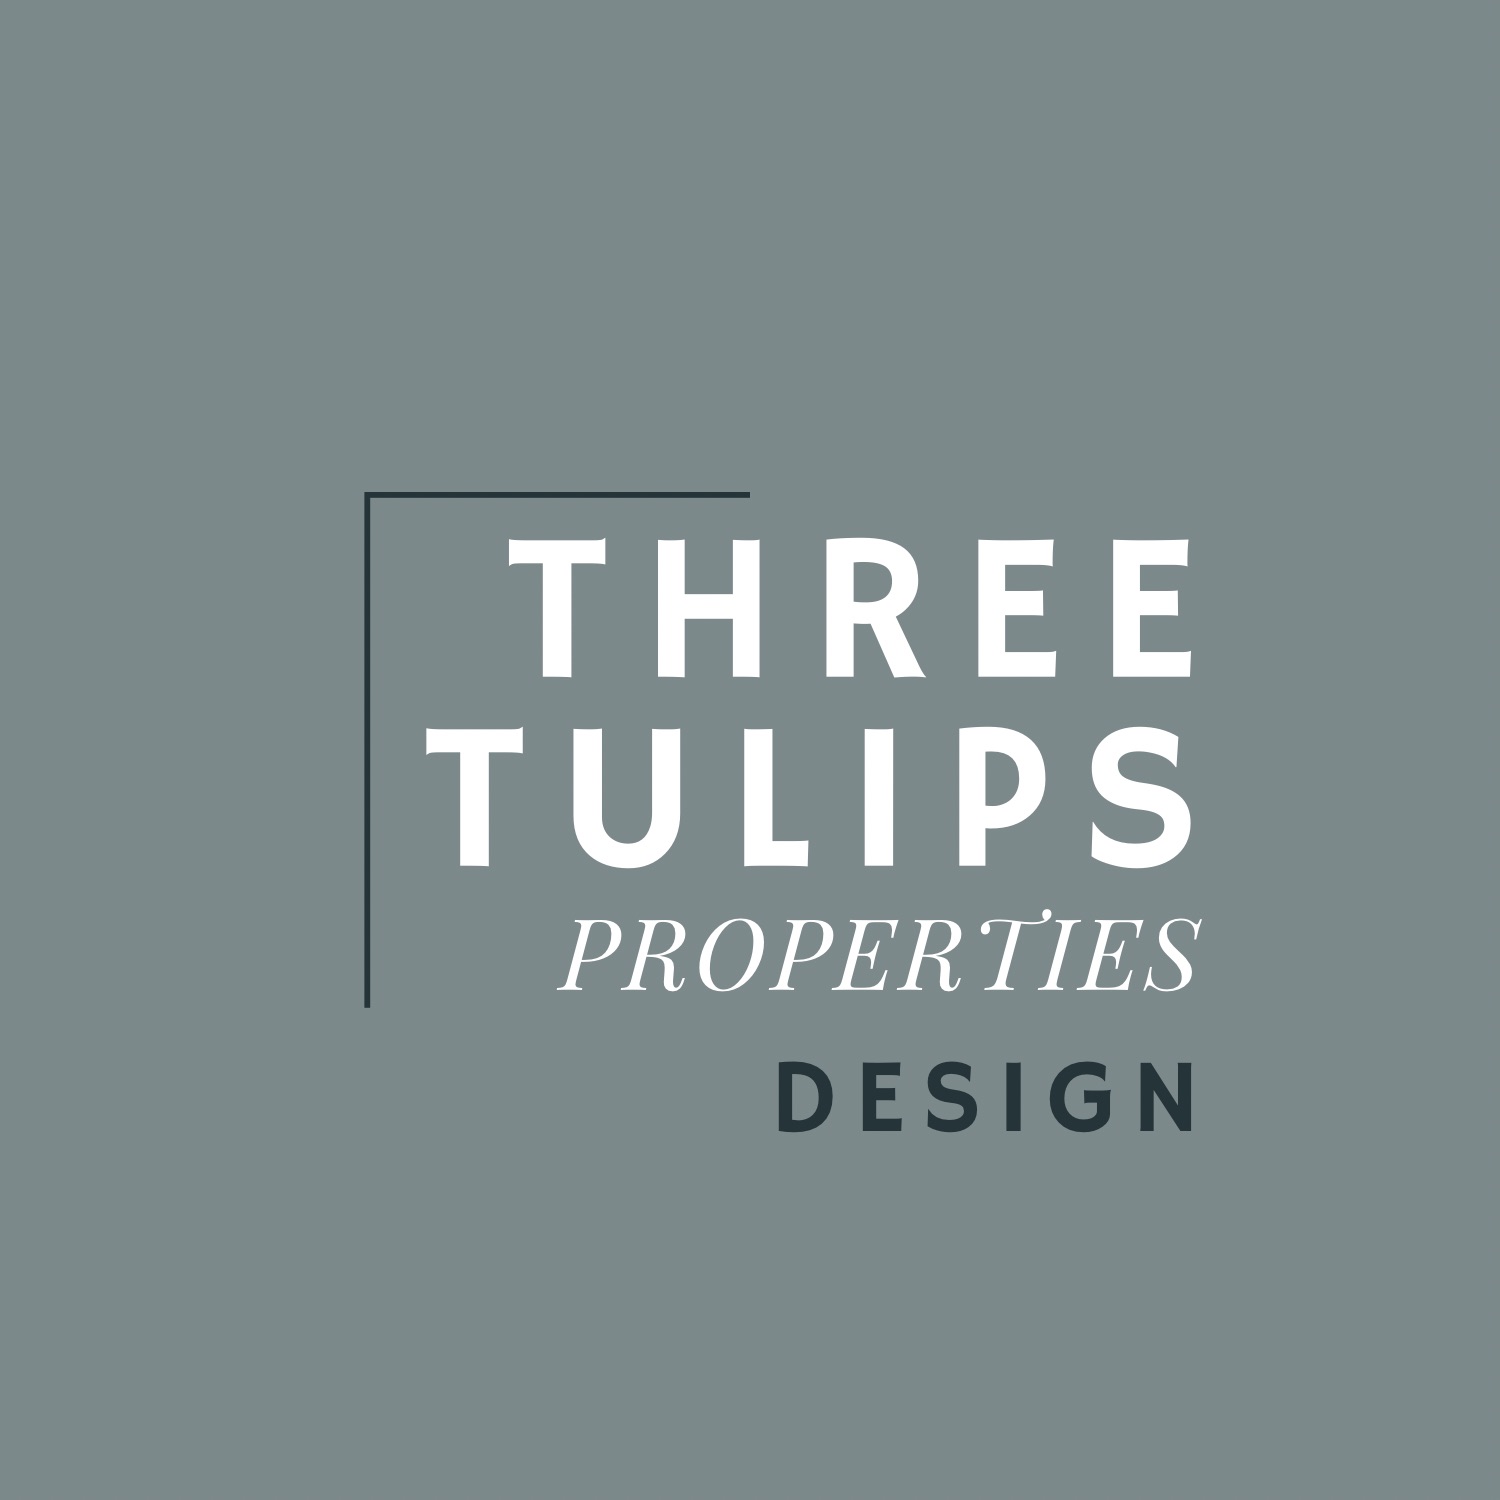 Three Tulips Properties